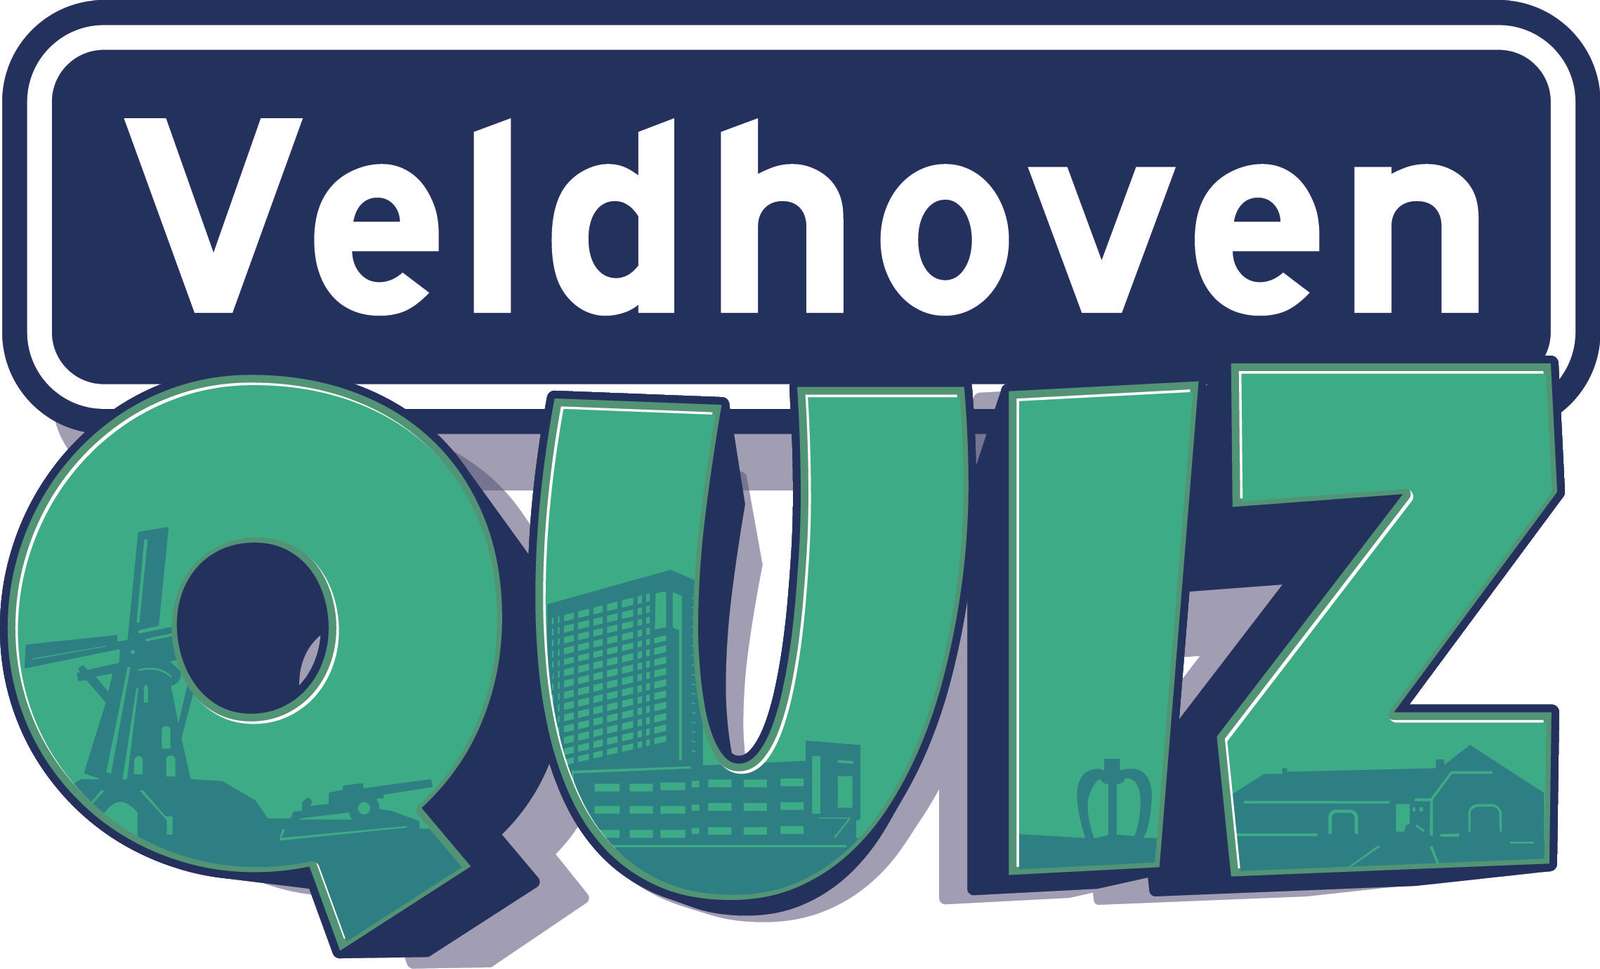 Veldhoven-Quiz Online-Puzzle